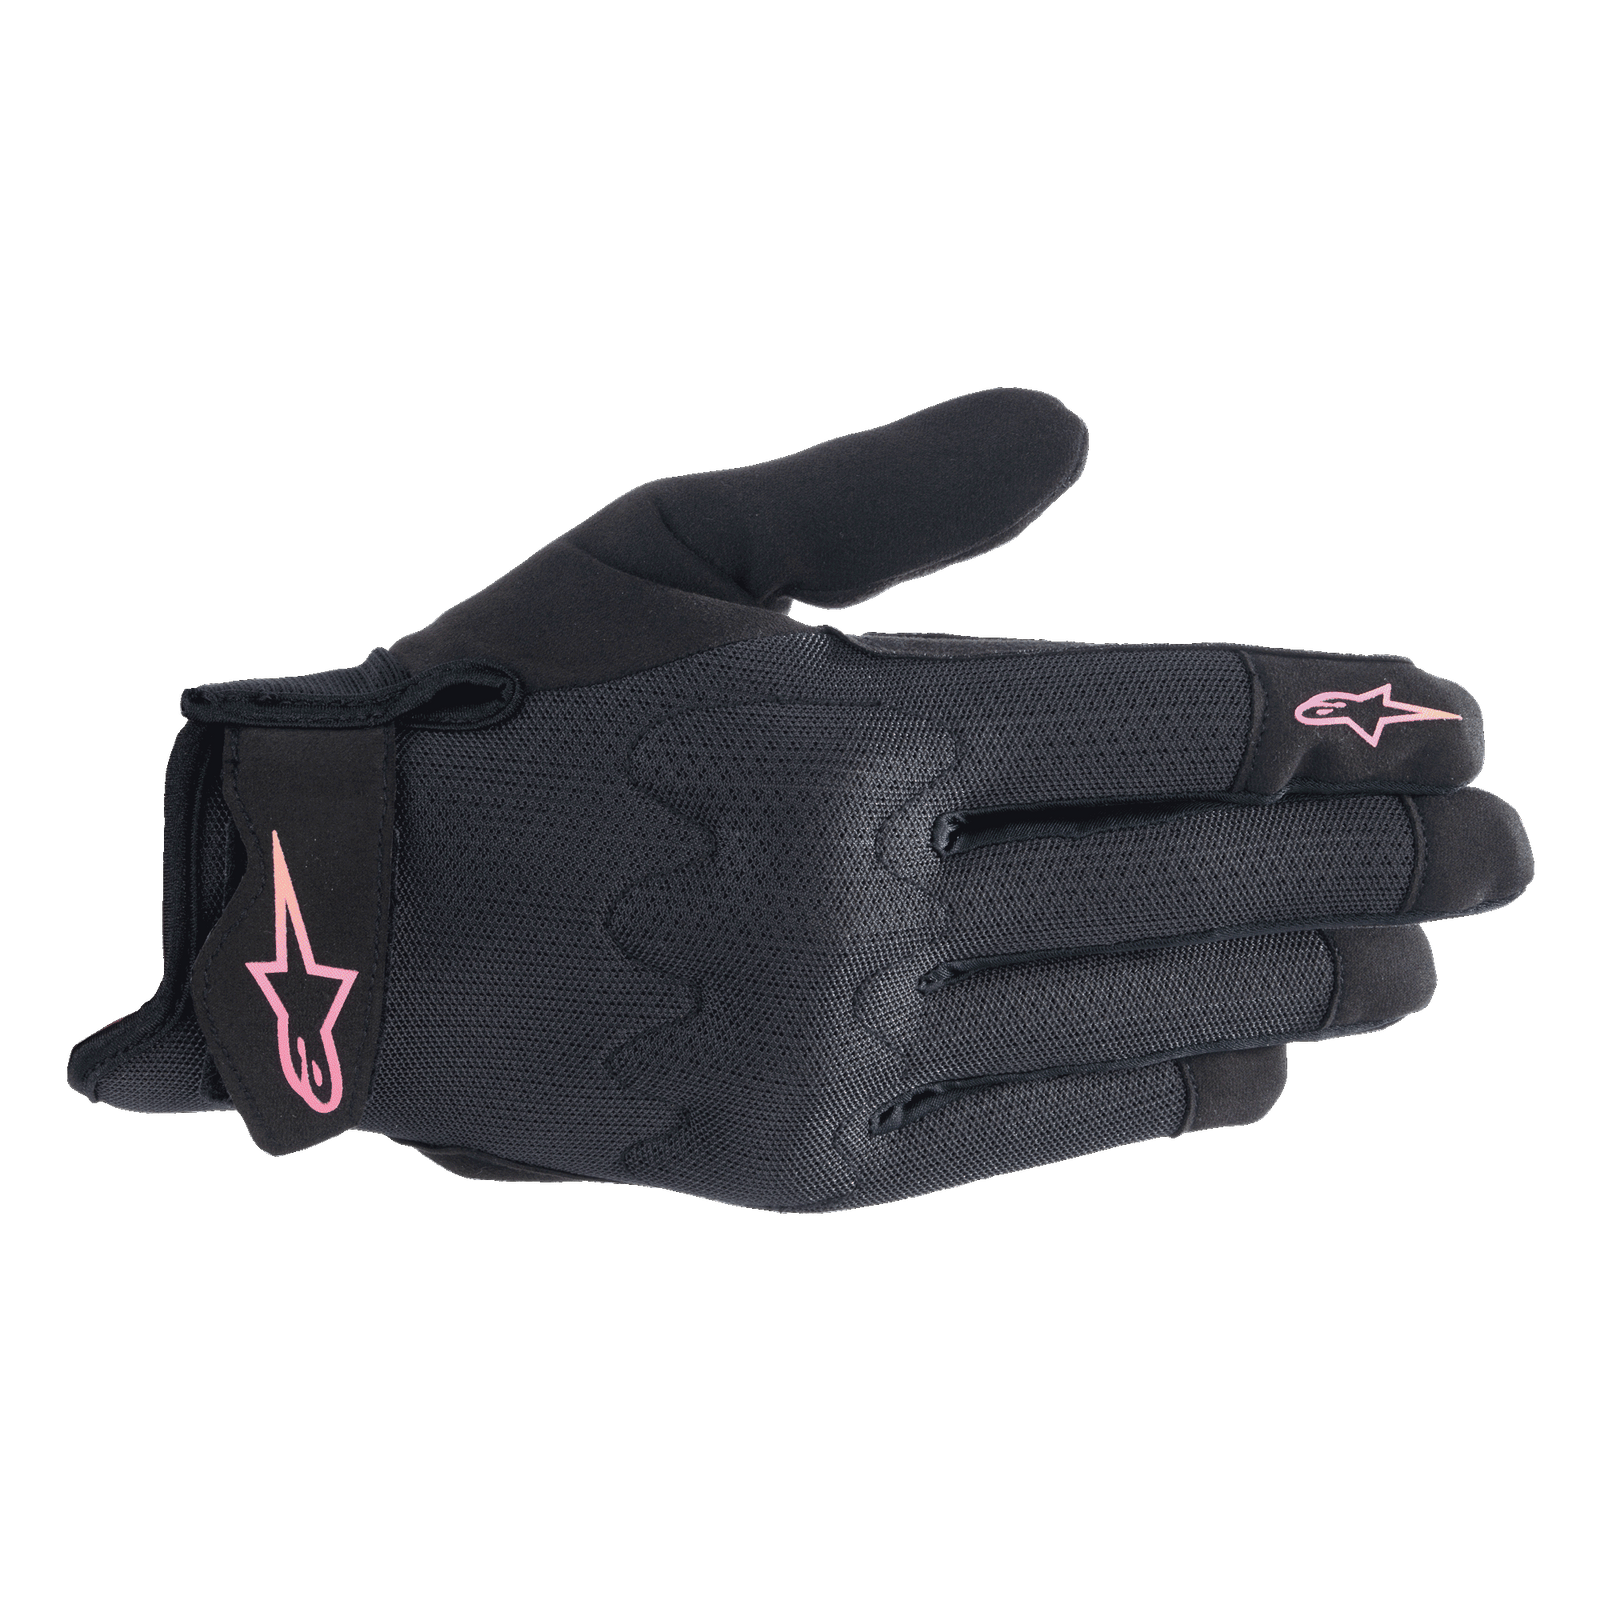 Stated Women's Handschuhe